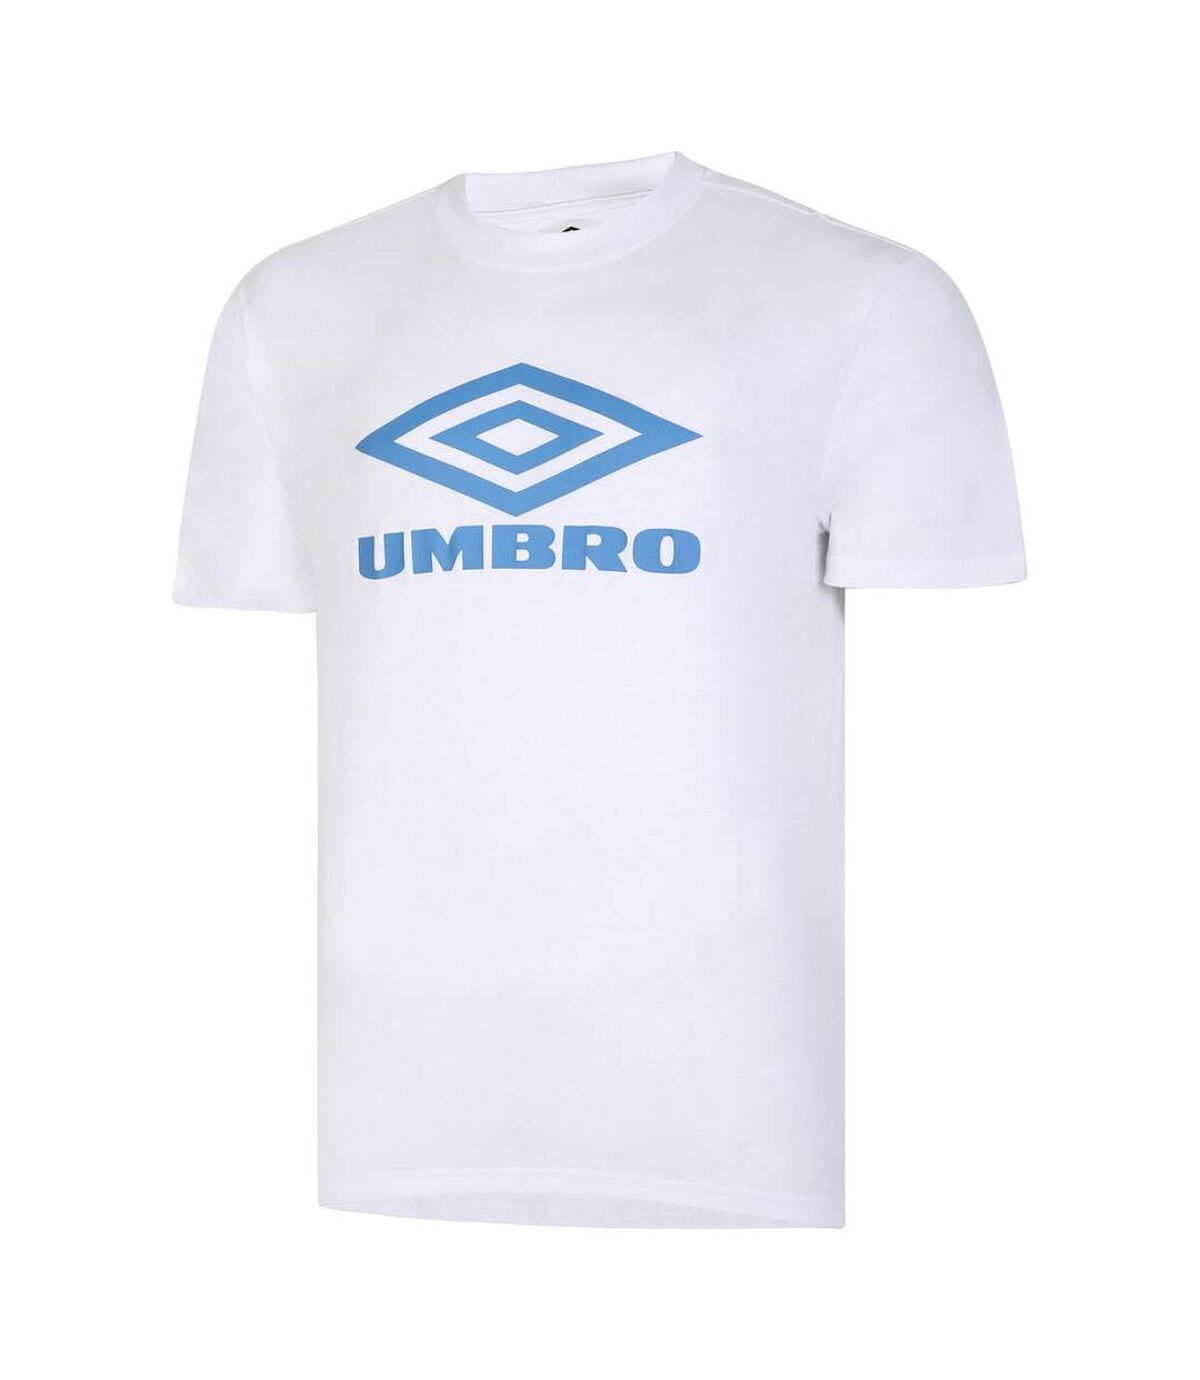 Umbro - T-shirt DIAMOND - Homme (Blanc / Bleu) - UTUO874